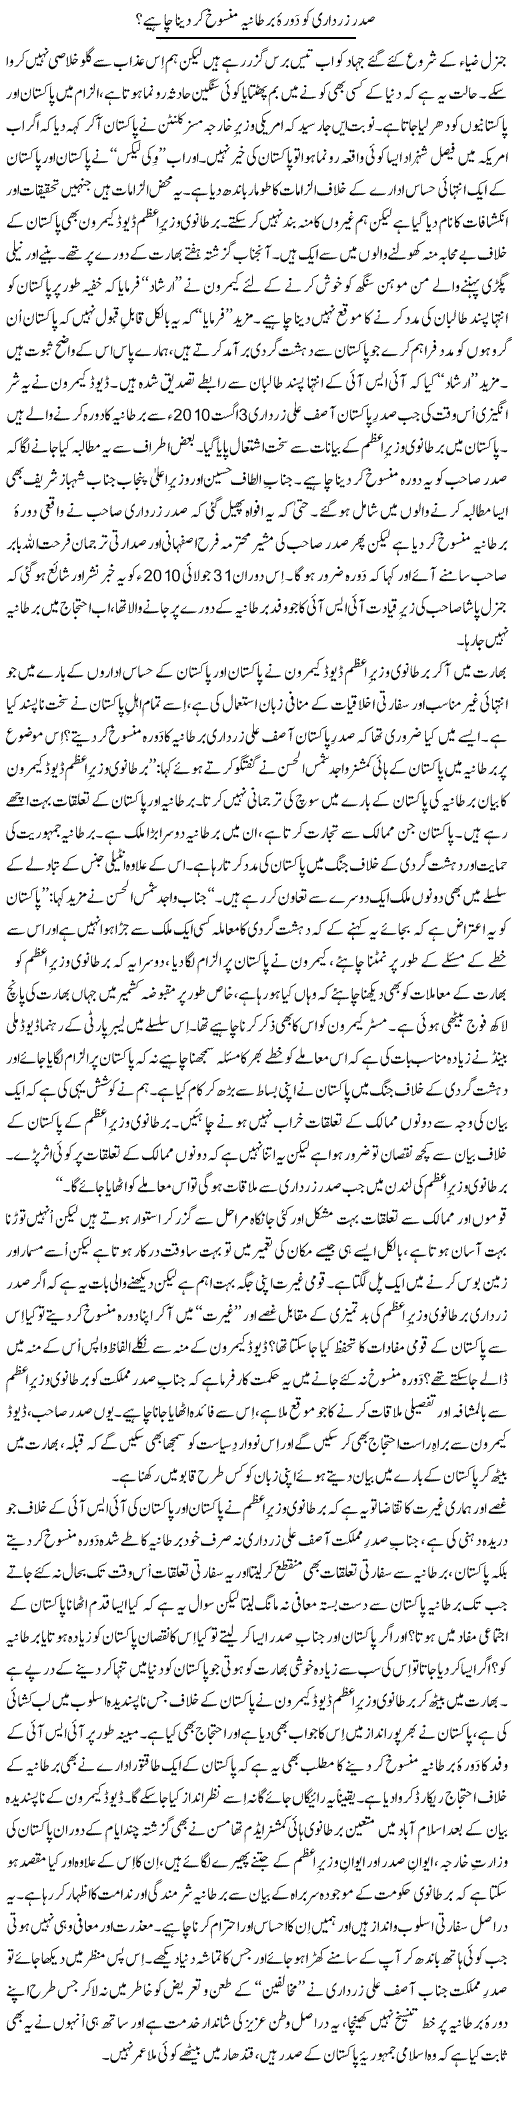 Zardari Dorae England Express Column Tanvir Qasir 2 August 2010